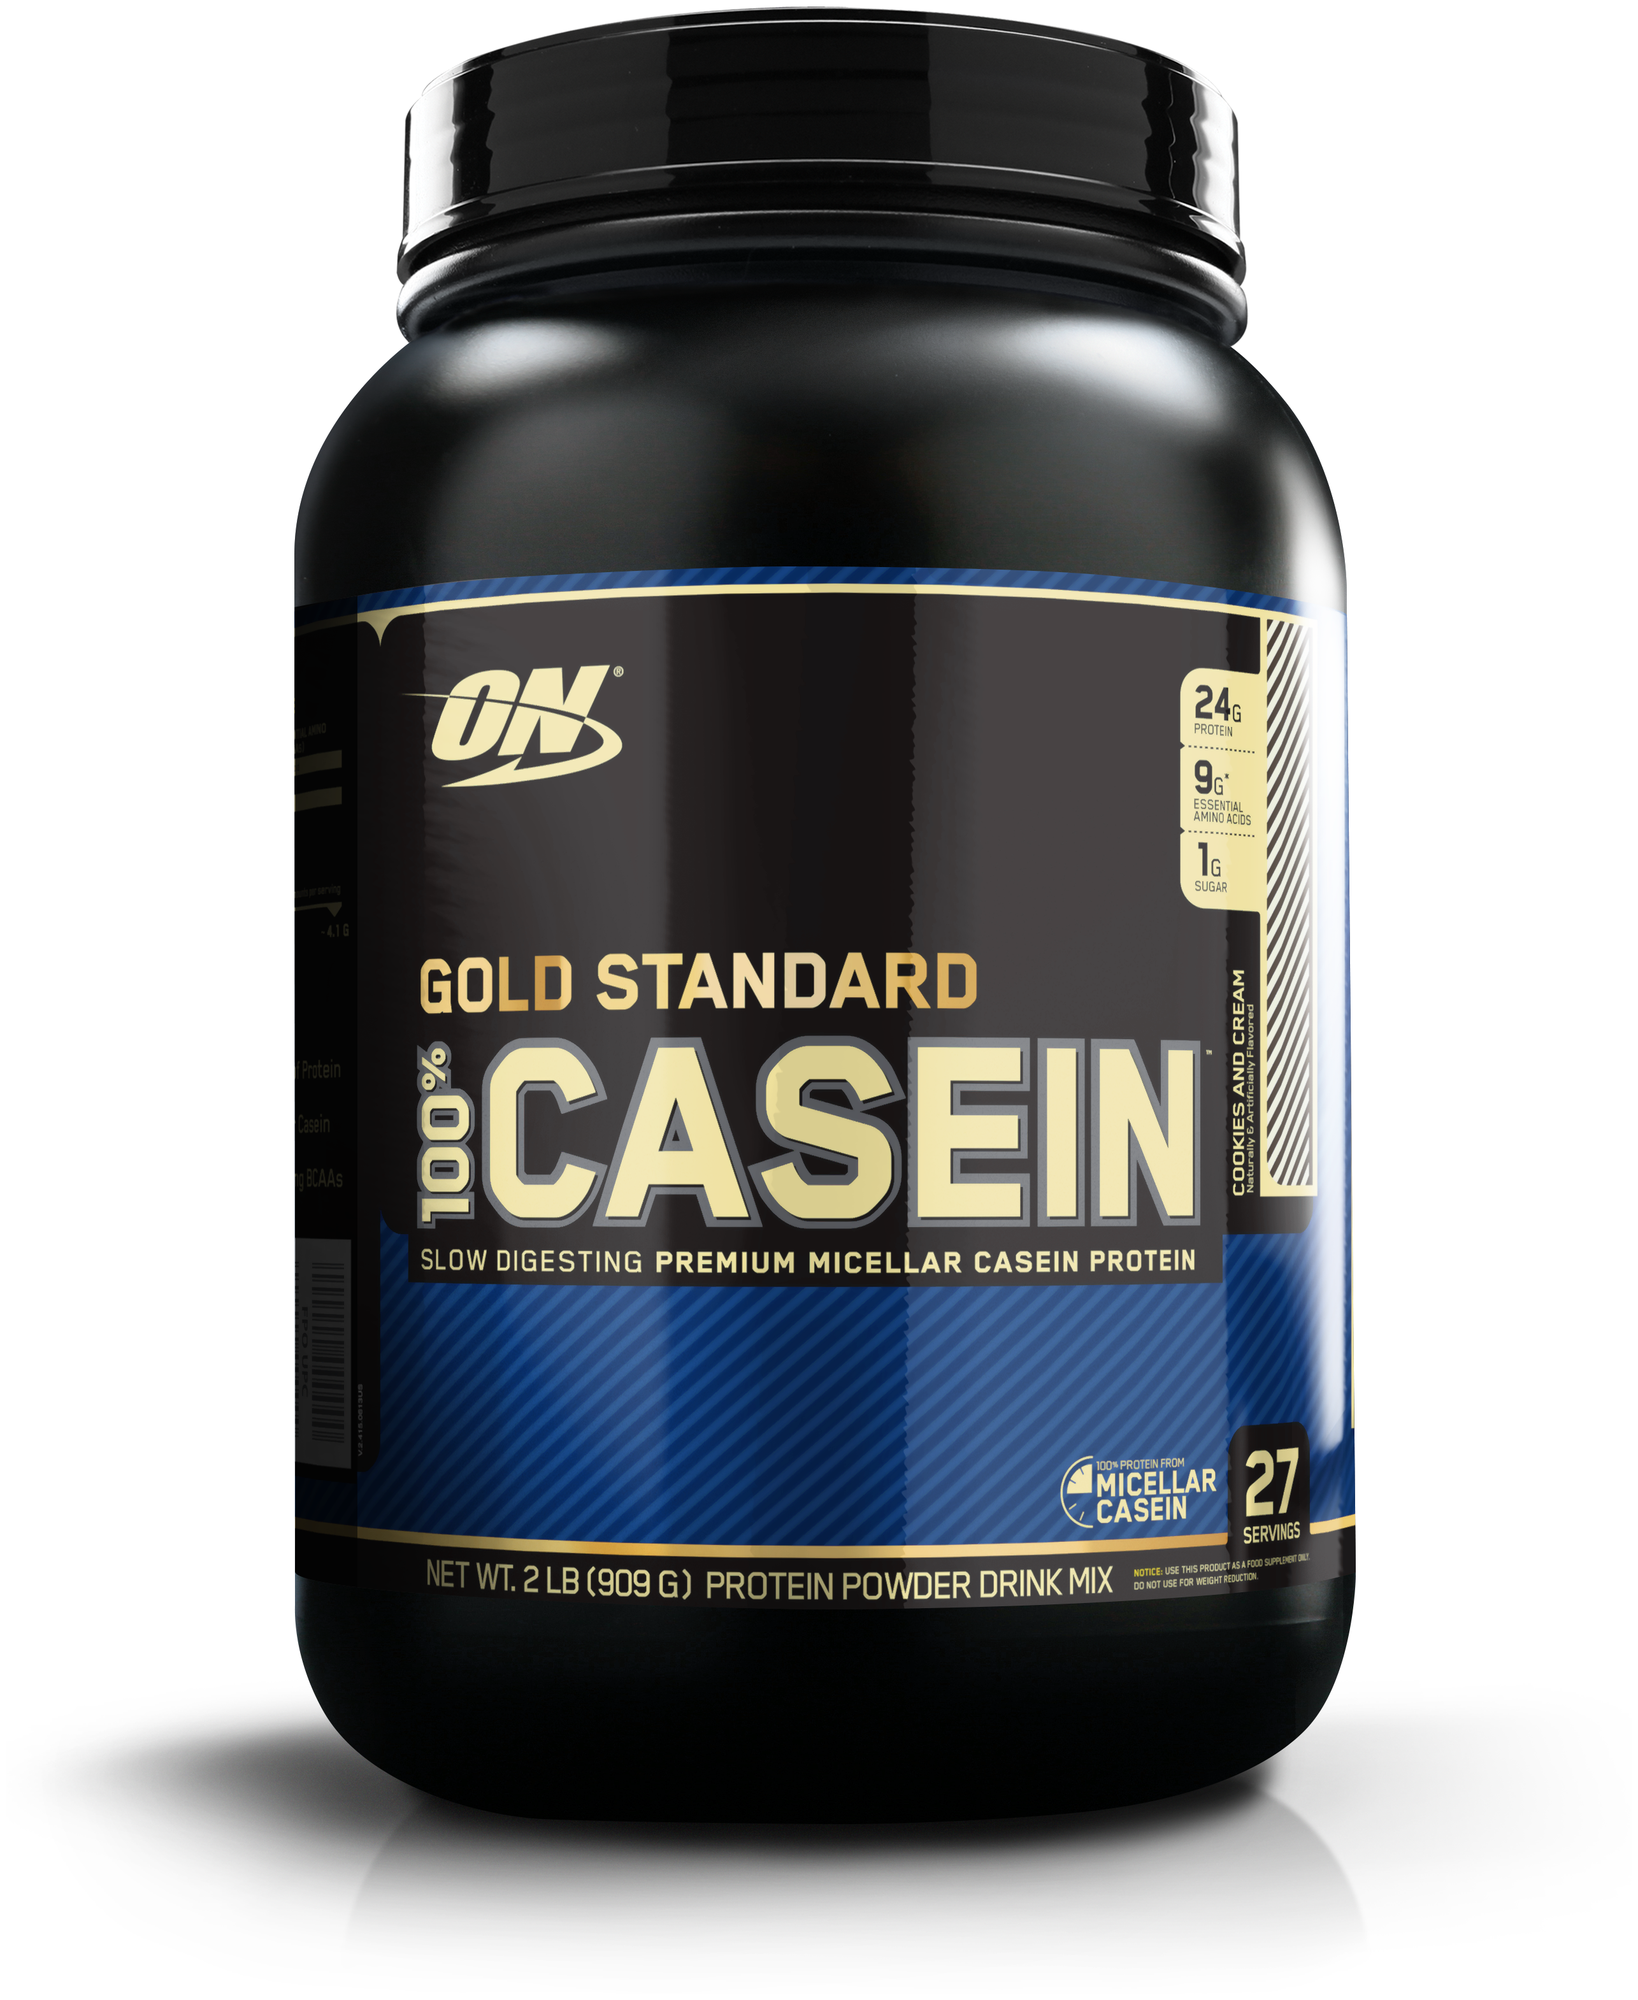 Протеин Optimum Nutrition 100% Casein Gold Standard (907-910 г) Печенье со Сливками